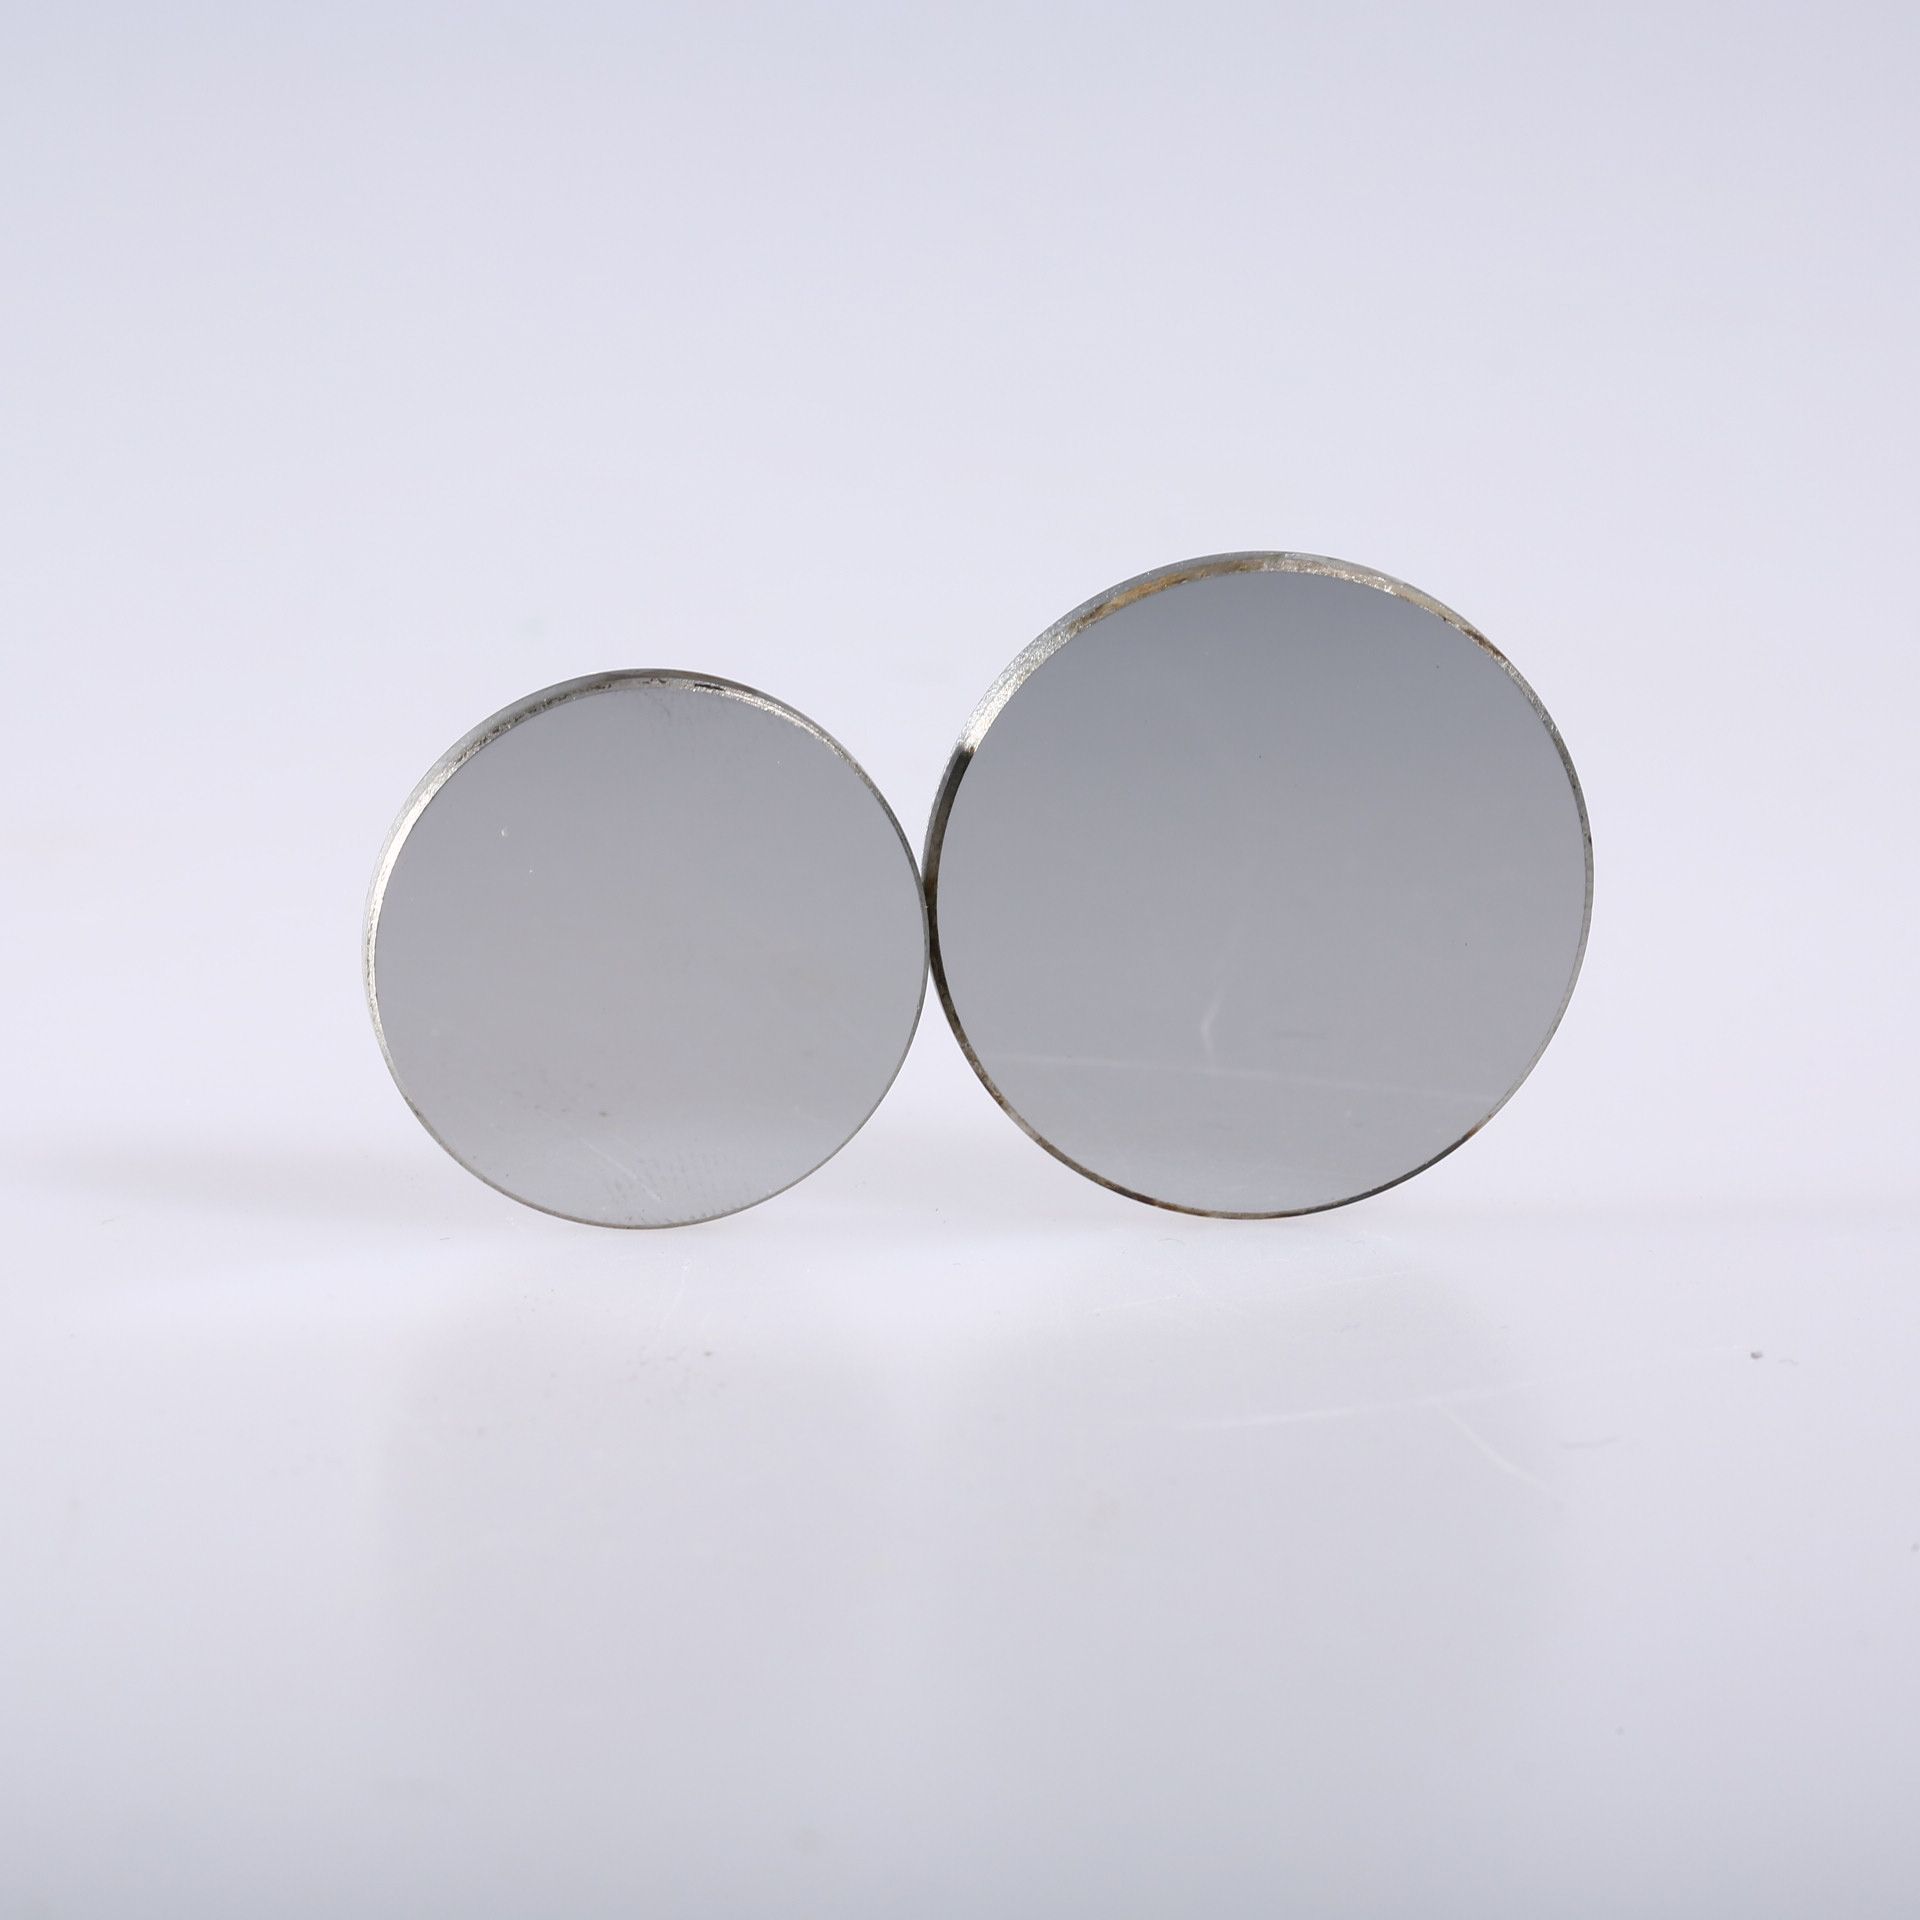 19202530mm-Dia-Mo-Reflective-Mirror-Molybdenum-Reflector-Lens-for-CO2-Laser-Cutting-Engraving-Machin-1435529